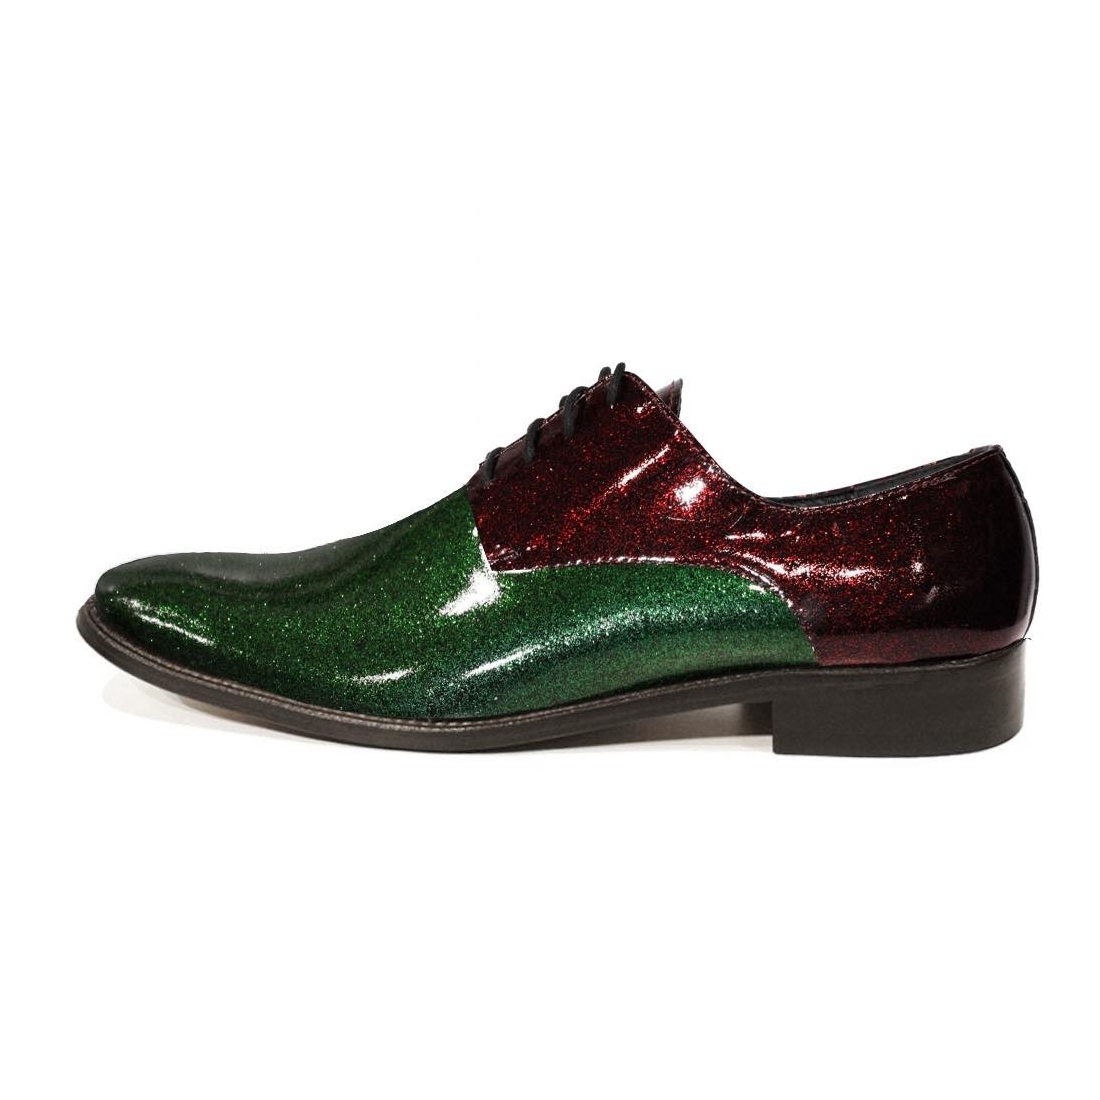 Modello Luccichio - Classic Shoes - Handmade Colorful Italian Leather Shoes